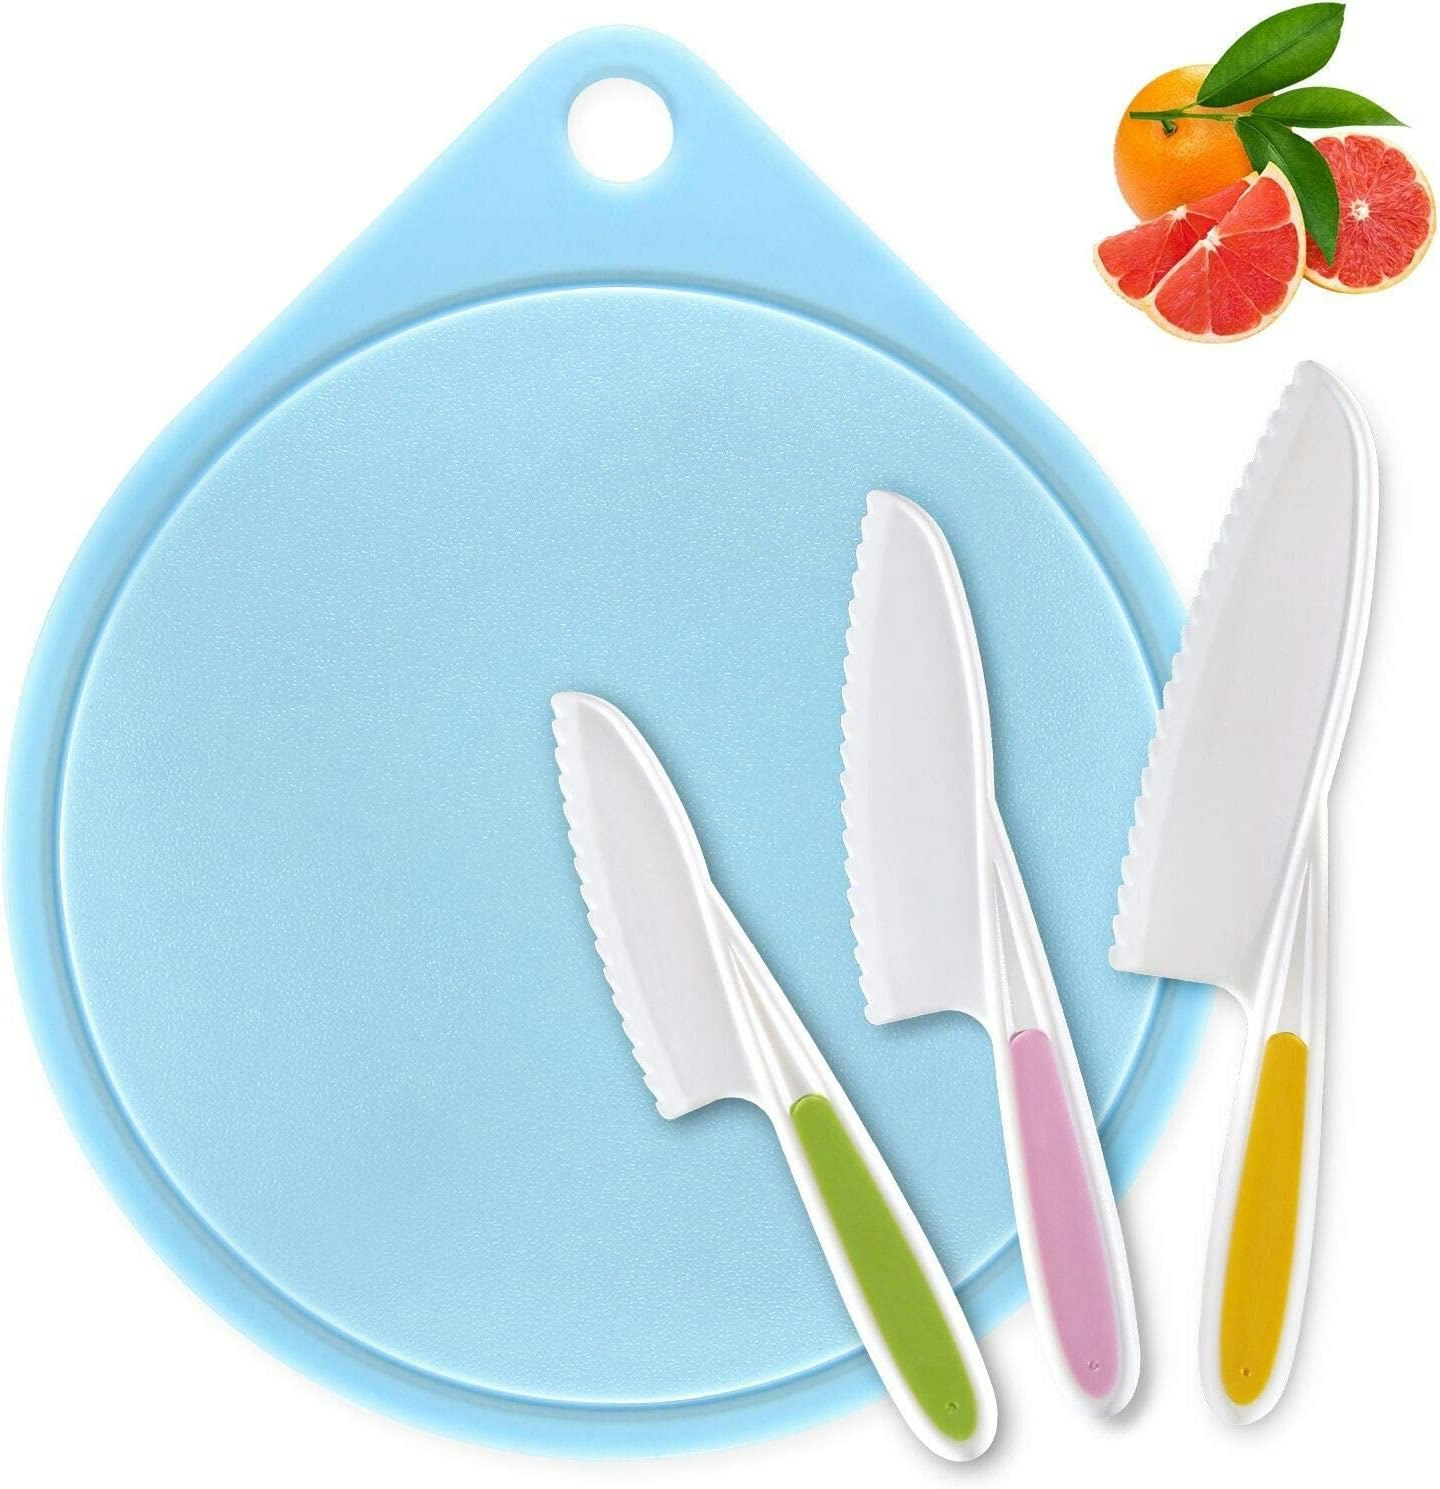 Tovla Jr. Kids Kitchen 3 Knife & Foldable Cutting Board Set Blue